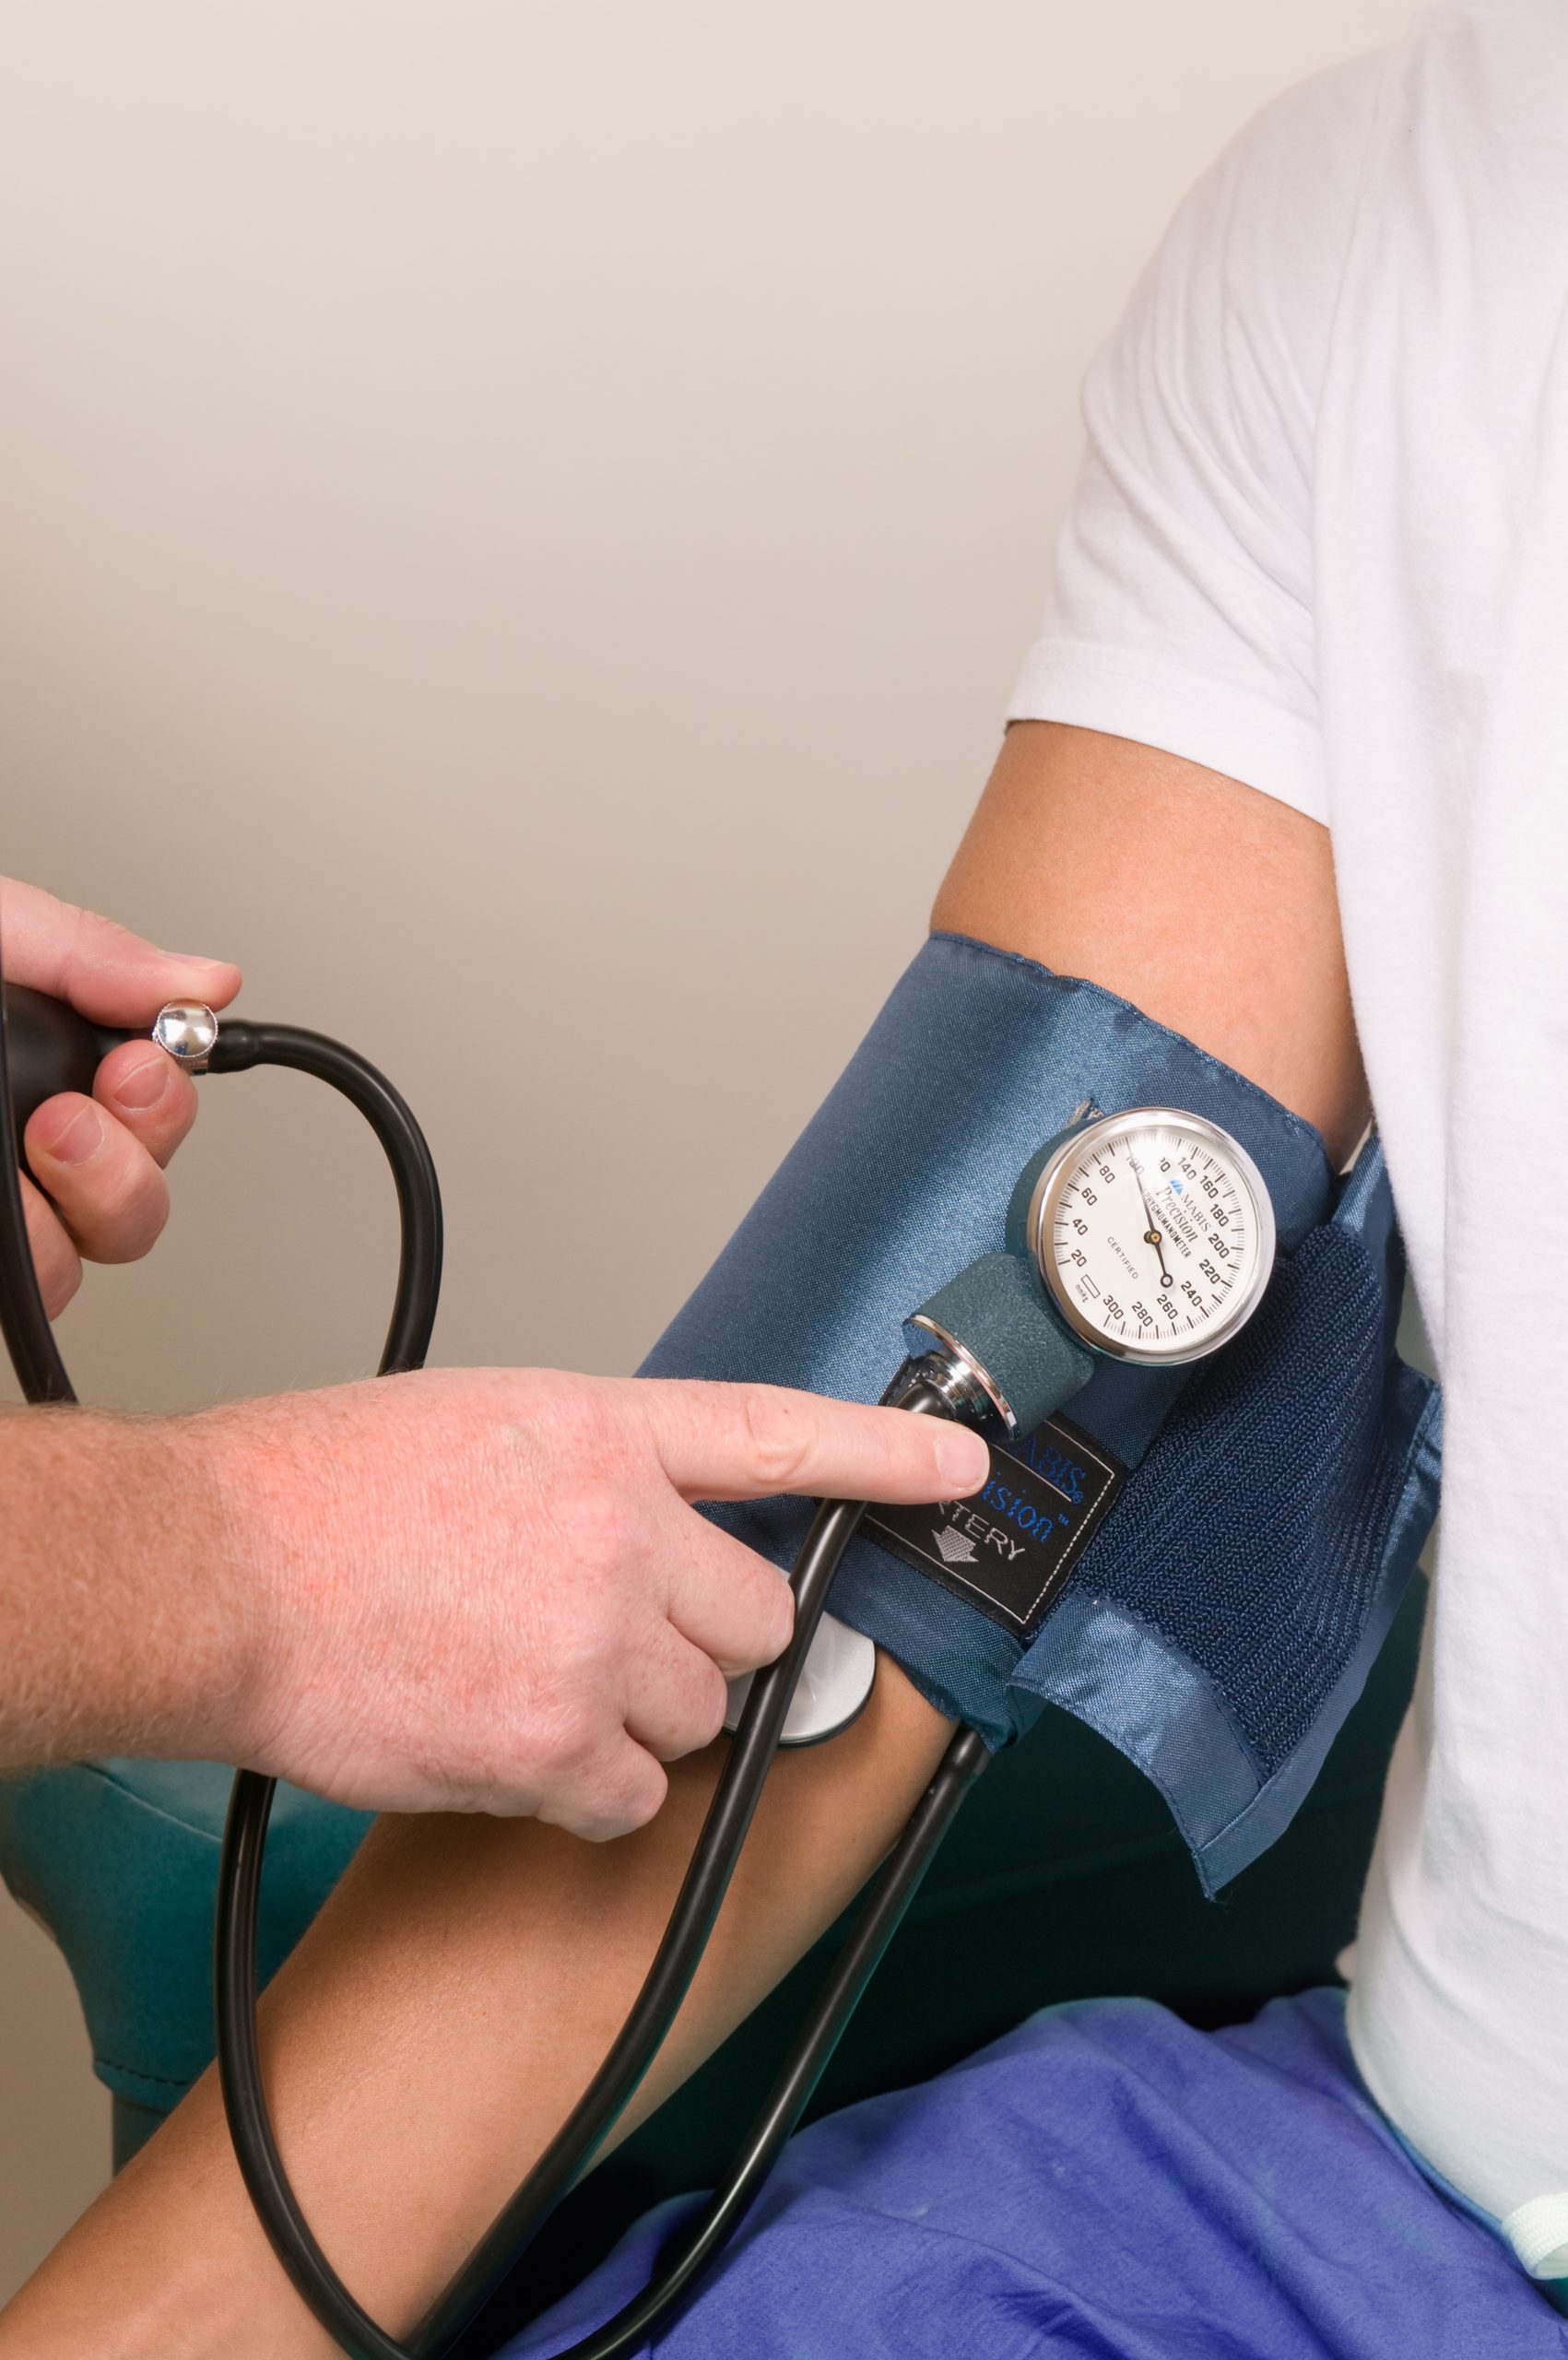 Does Pea Raise Blood Pressure?